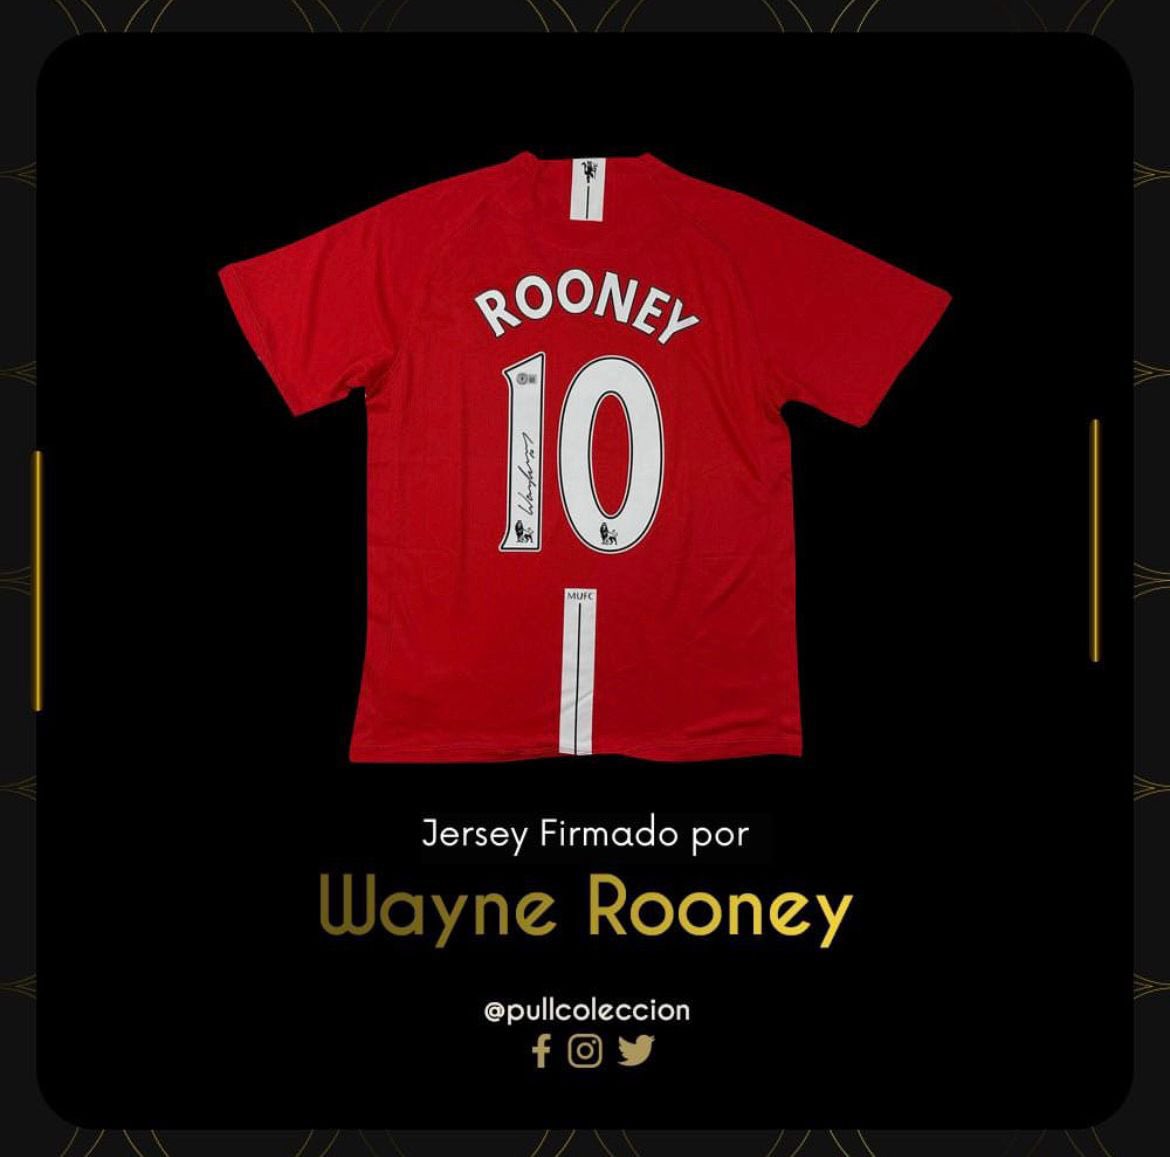 Jersey firmado por Wayne Rooney.⚽️

#PullColeccionables | #ManchesterUnited